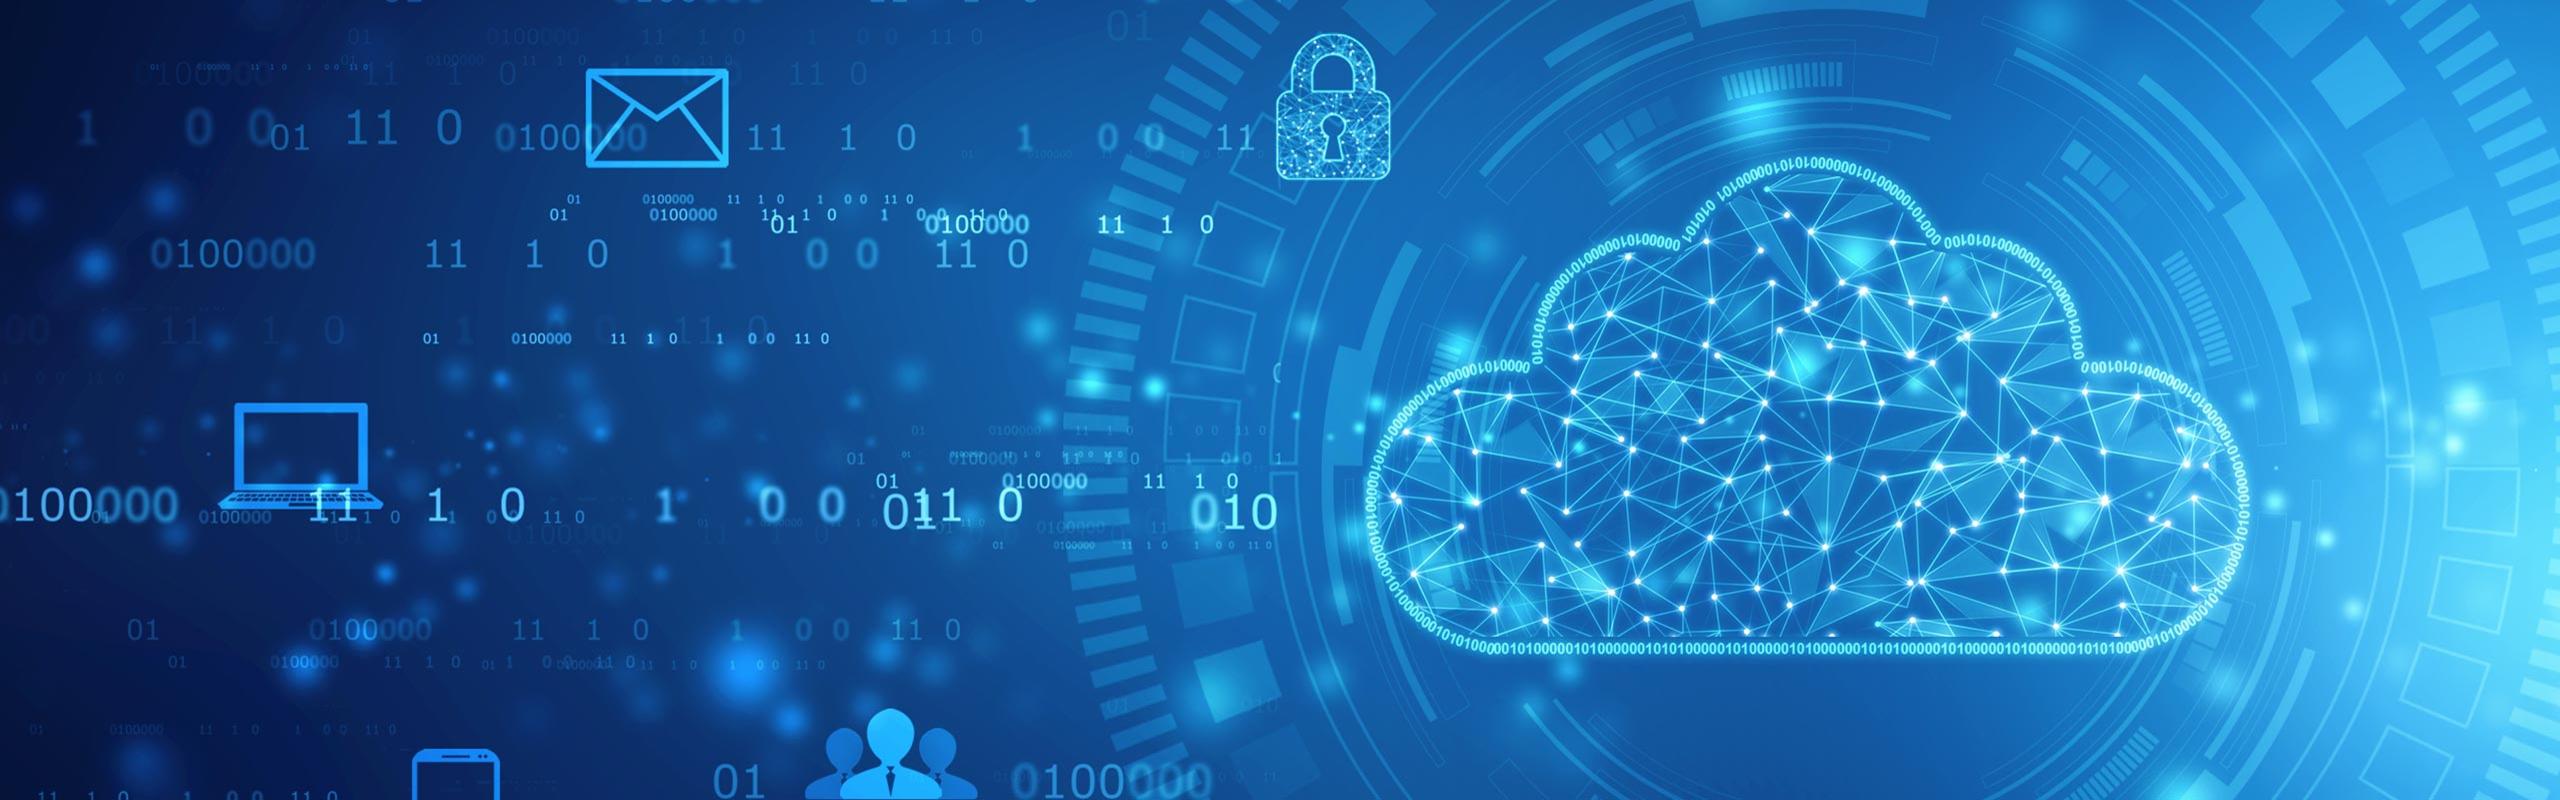 tresorit data security on cloud